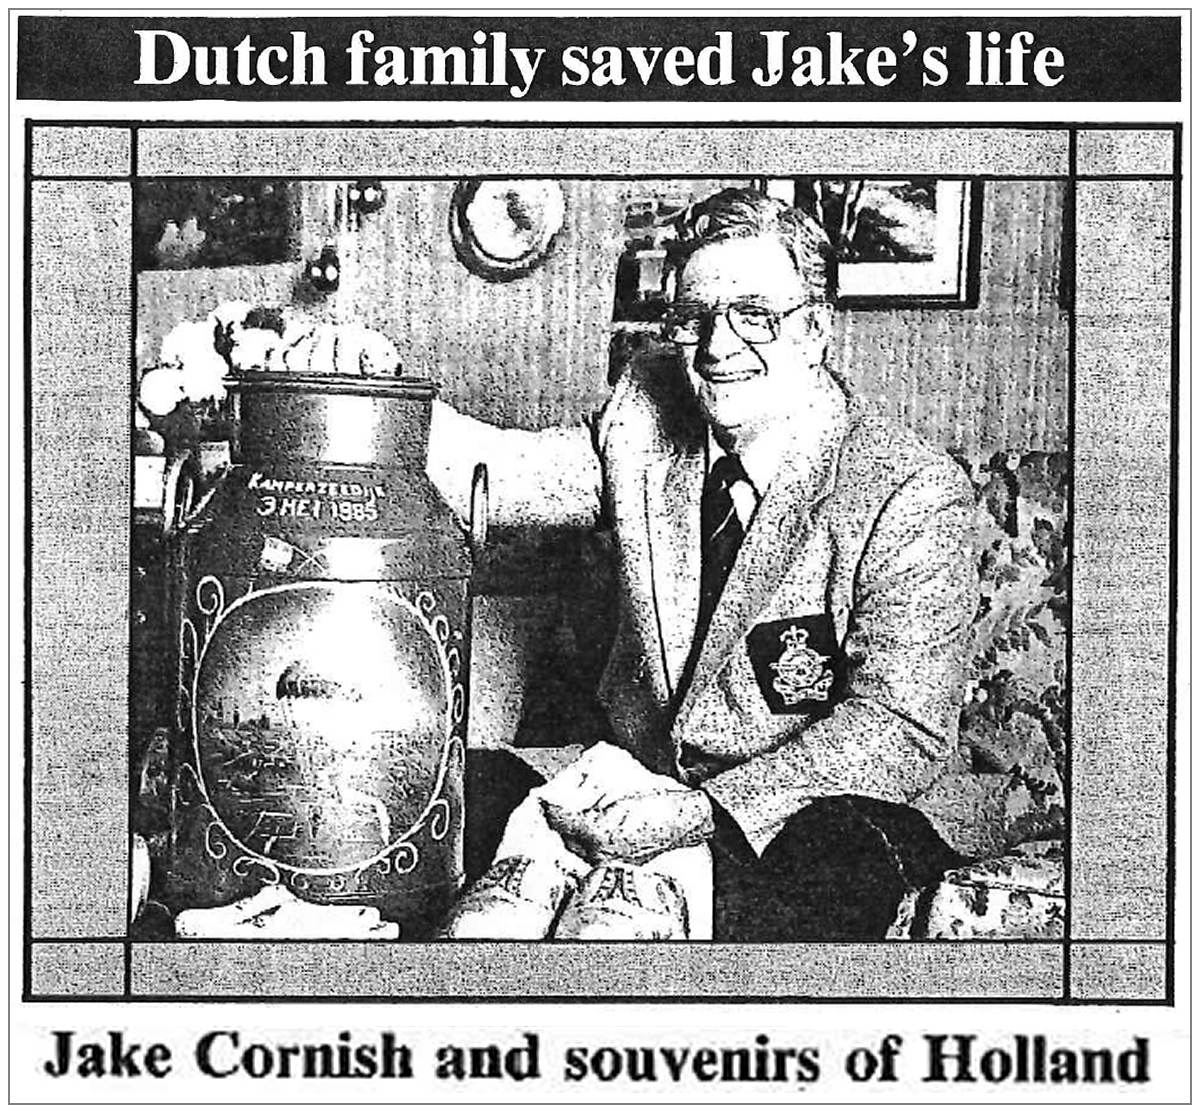 Jake Cornish and souvenirs of Holland